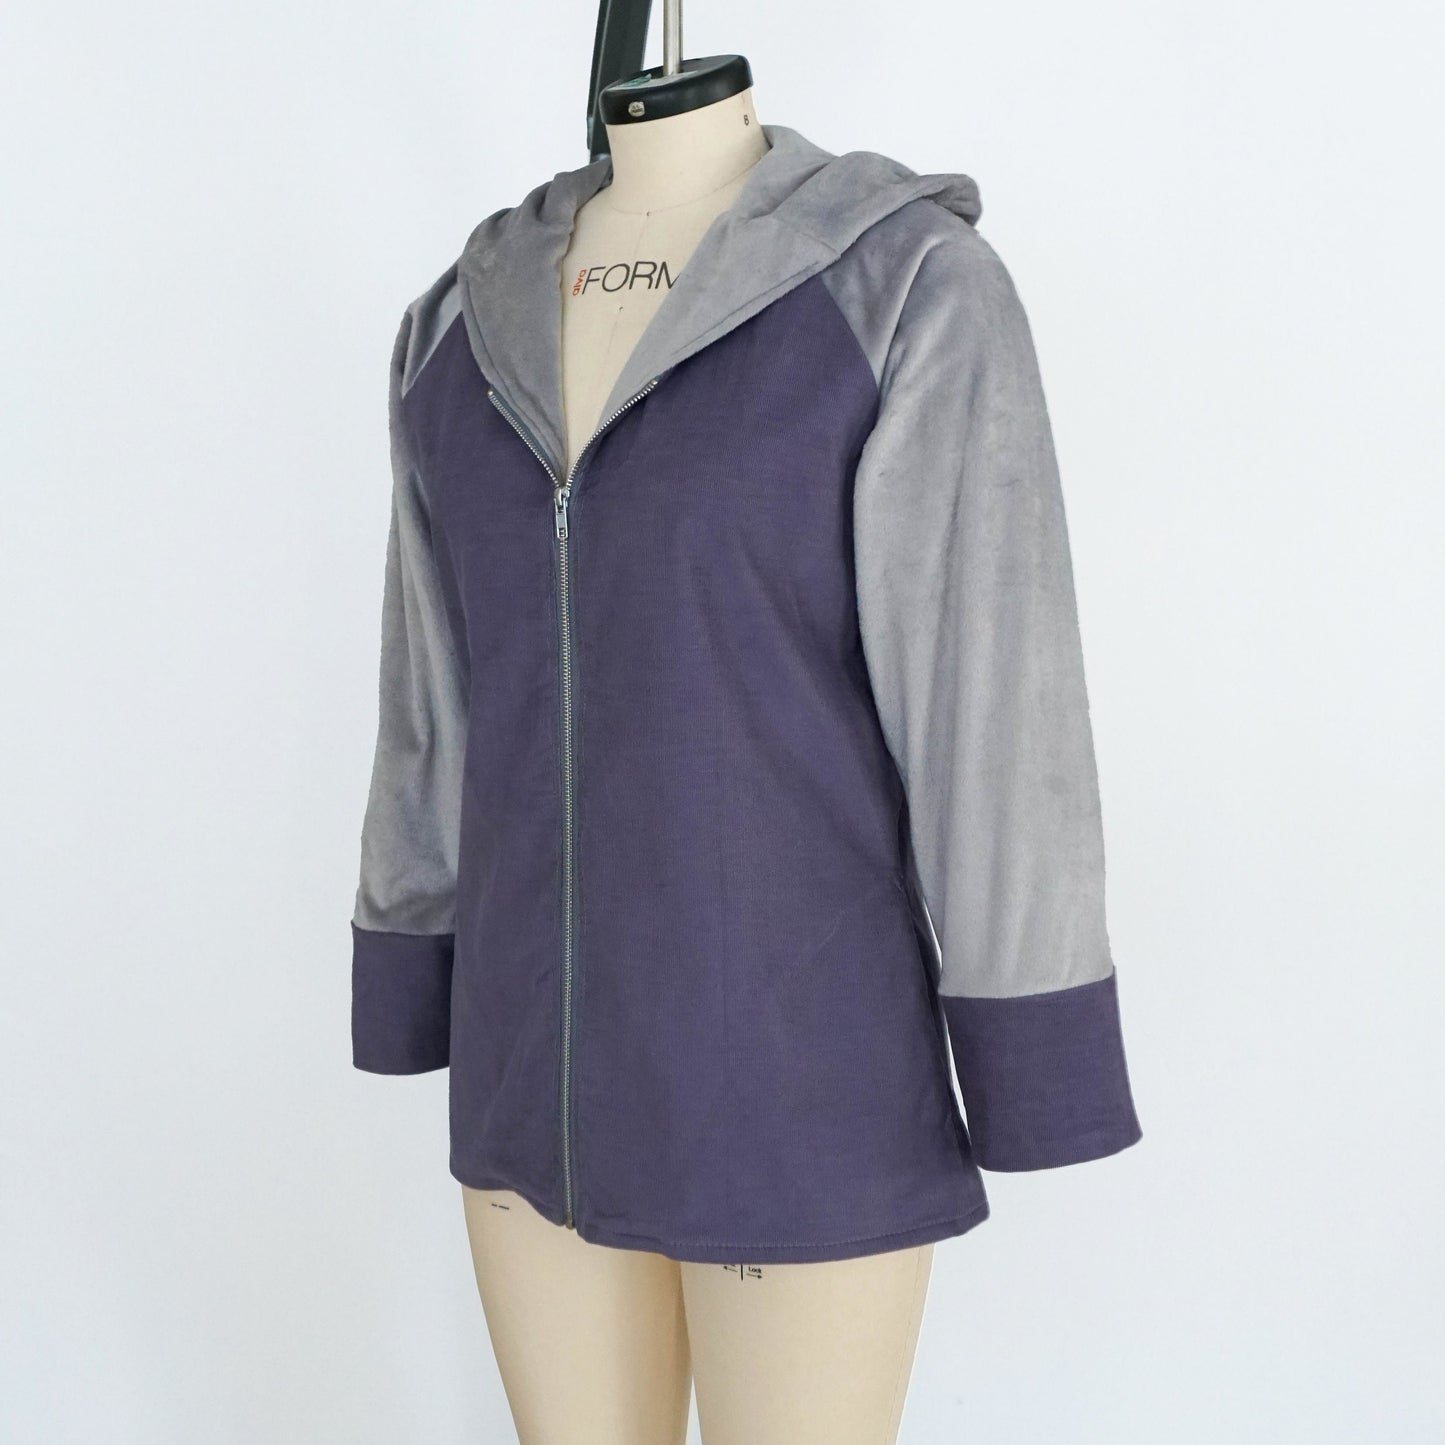 Raglan Sleeve Zip Up Jacket Sweater Cosplay Sewing Pattern/Downloadable PDF File